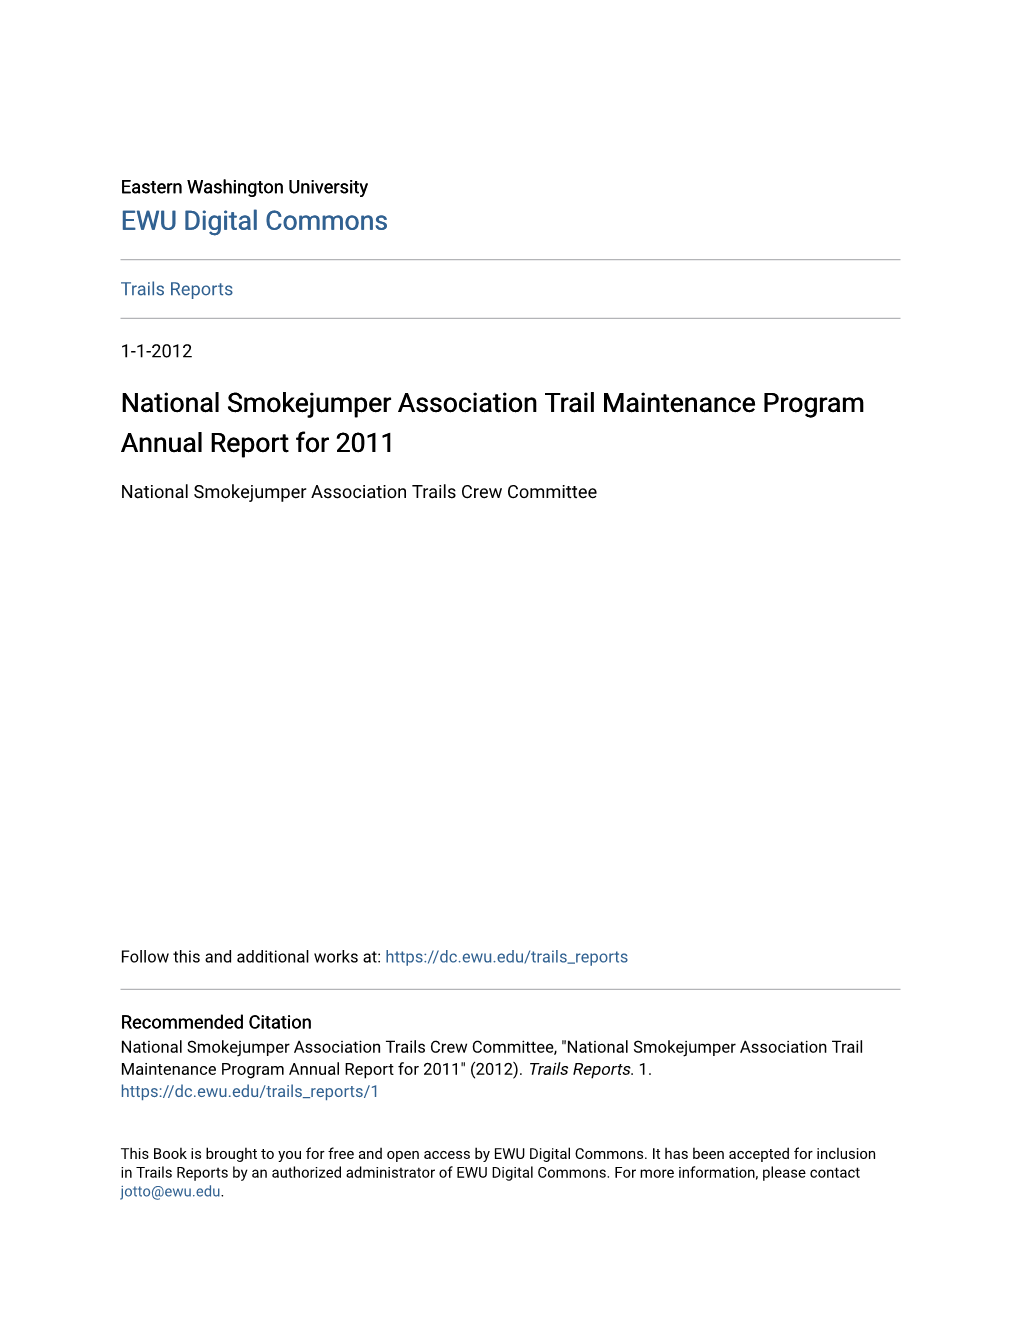 National Smokejumper Association Trail Maintenance Program Annual Report for 2011